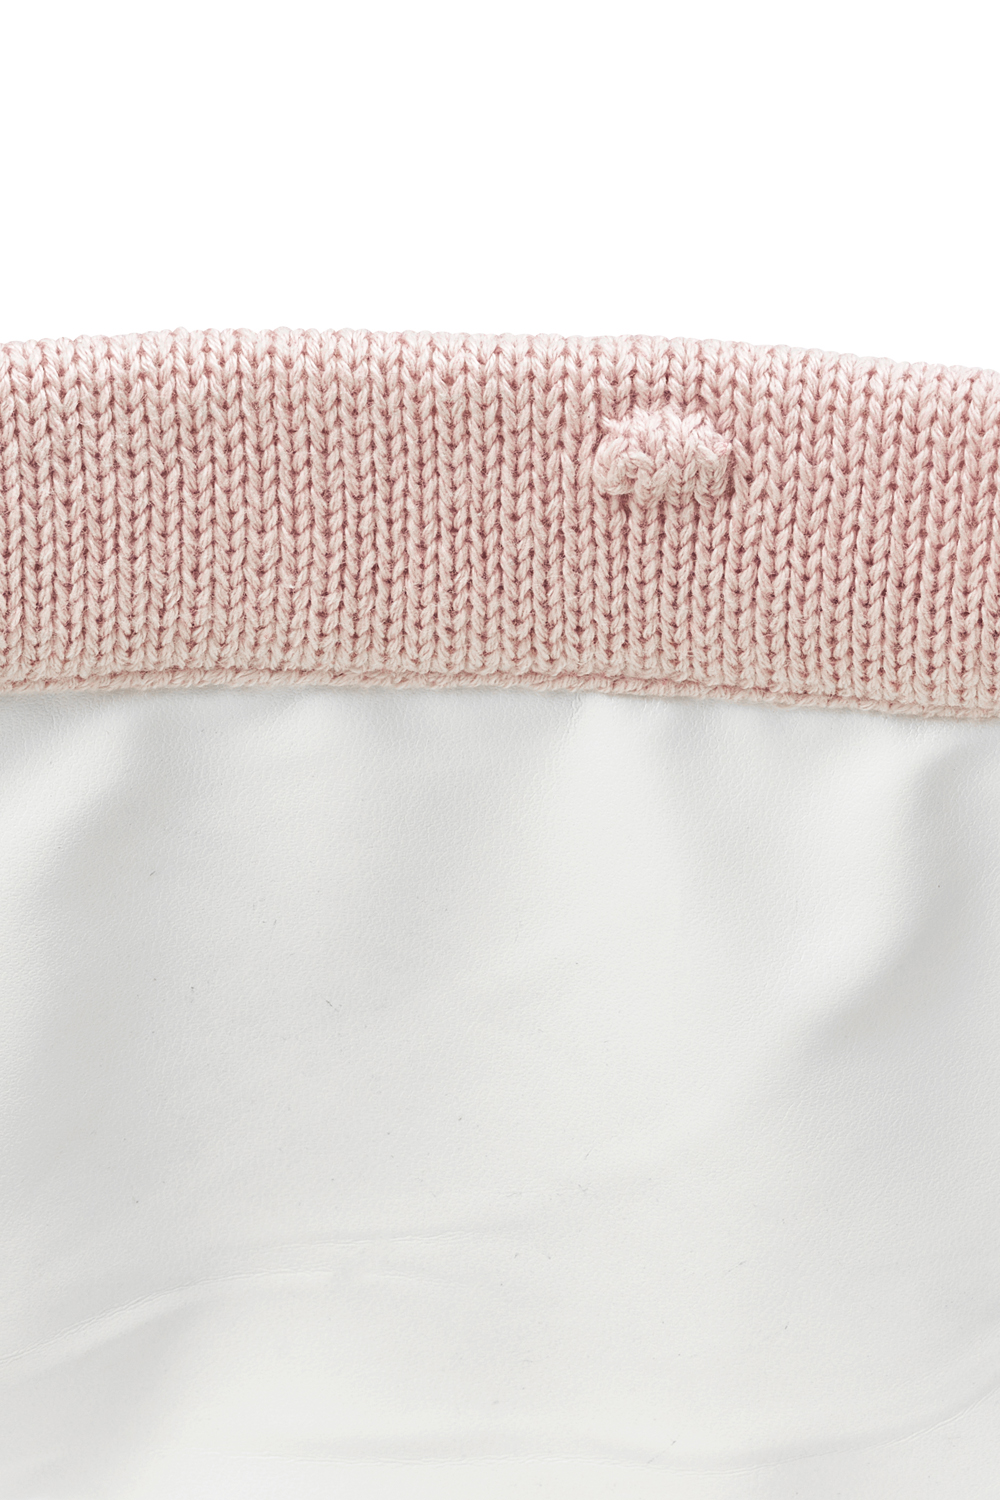 Commodemand Small Mini Knots - Soft Pink - 21x16xh16cm